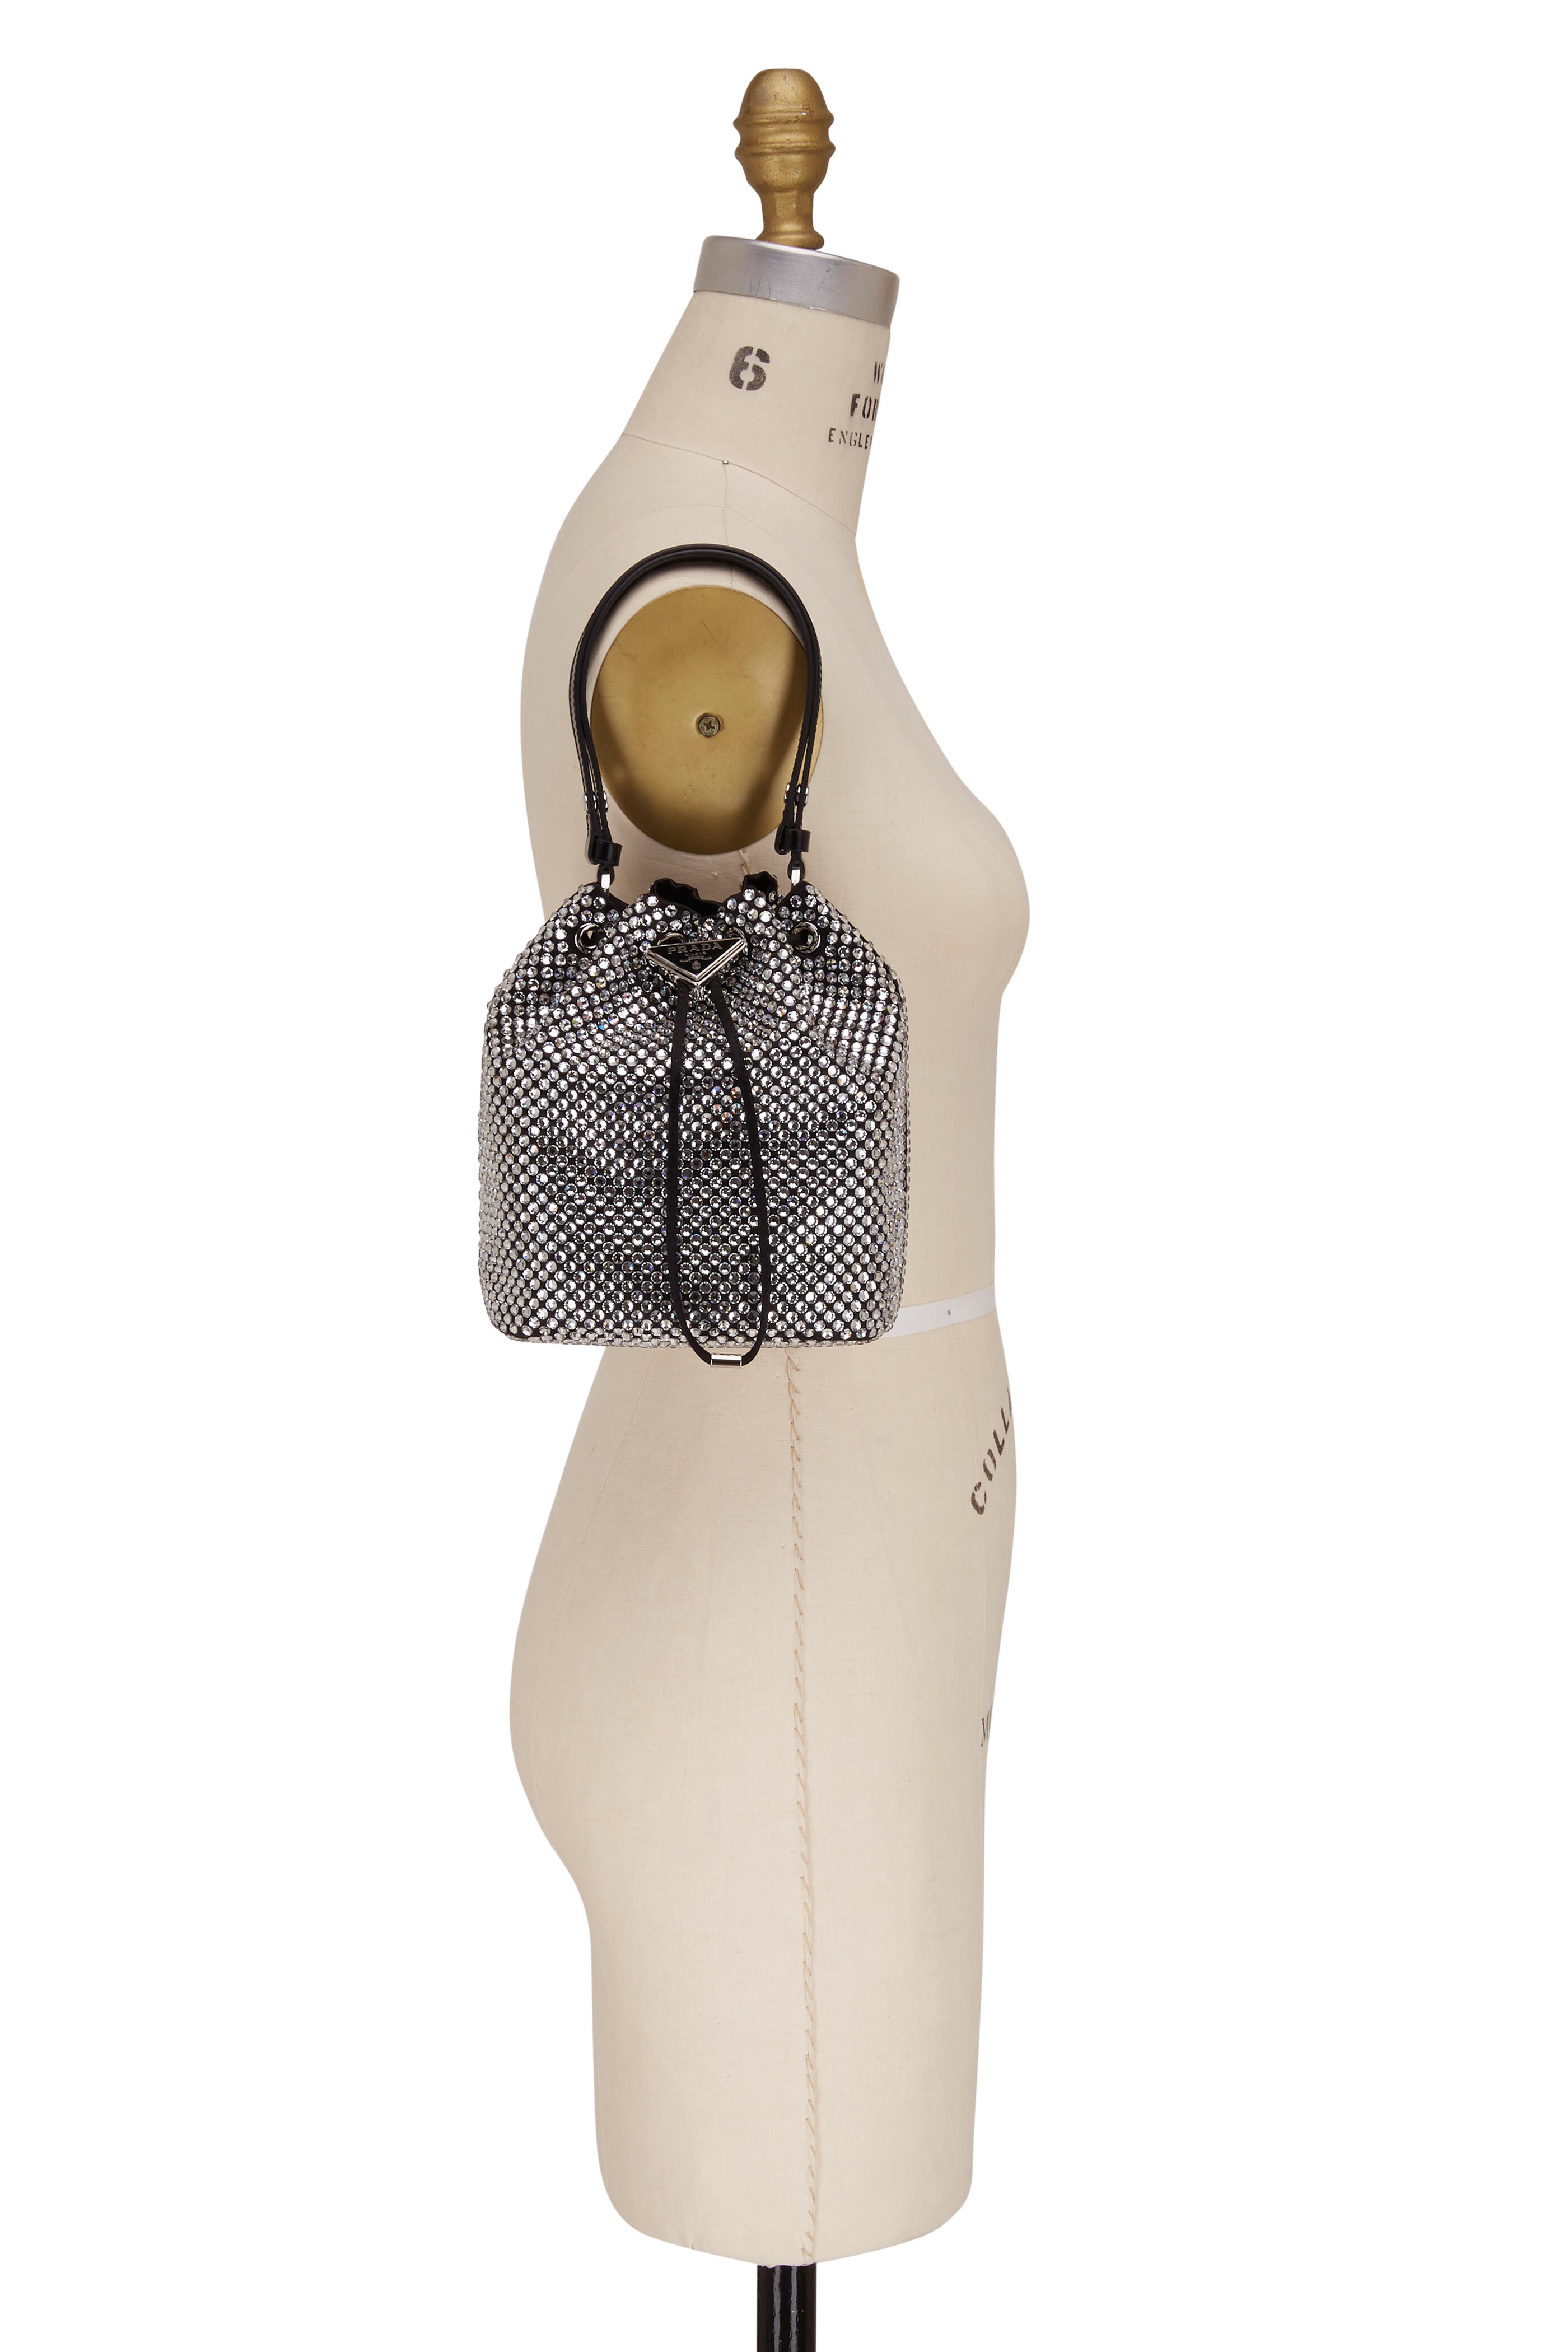 Prada - Black Satin & Crystal Embellished Mini Bucket Bag